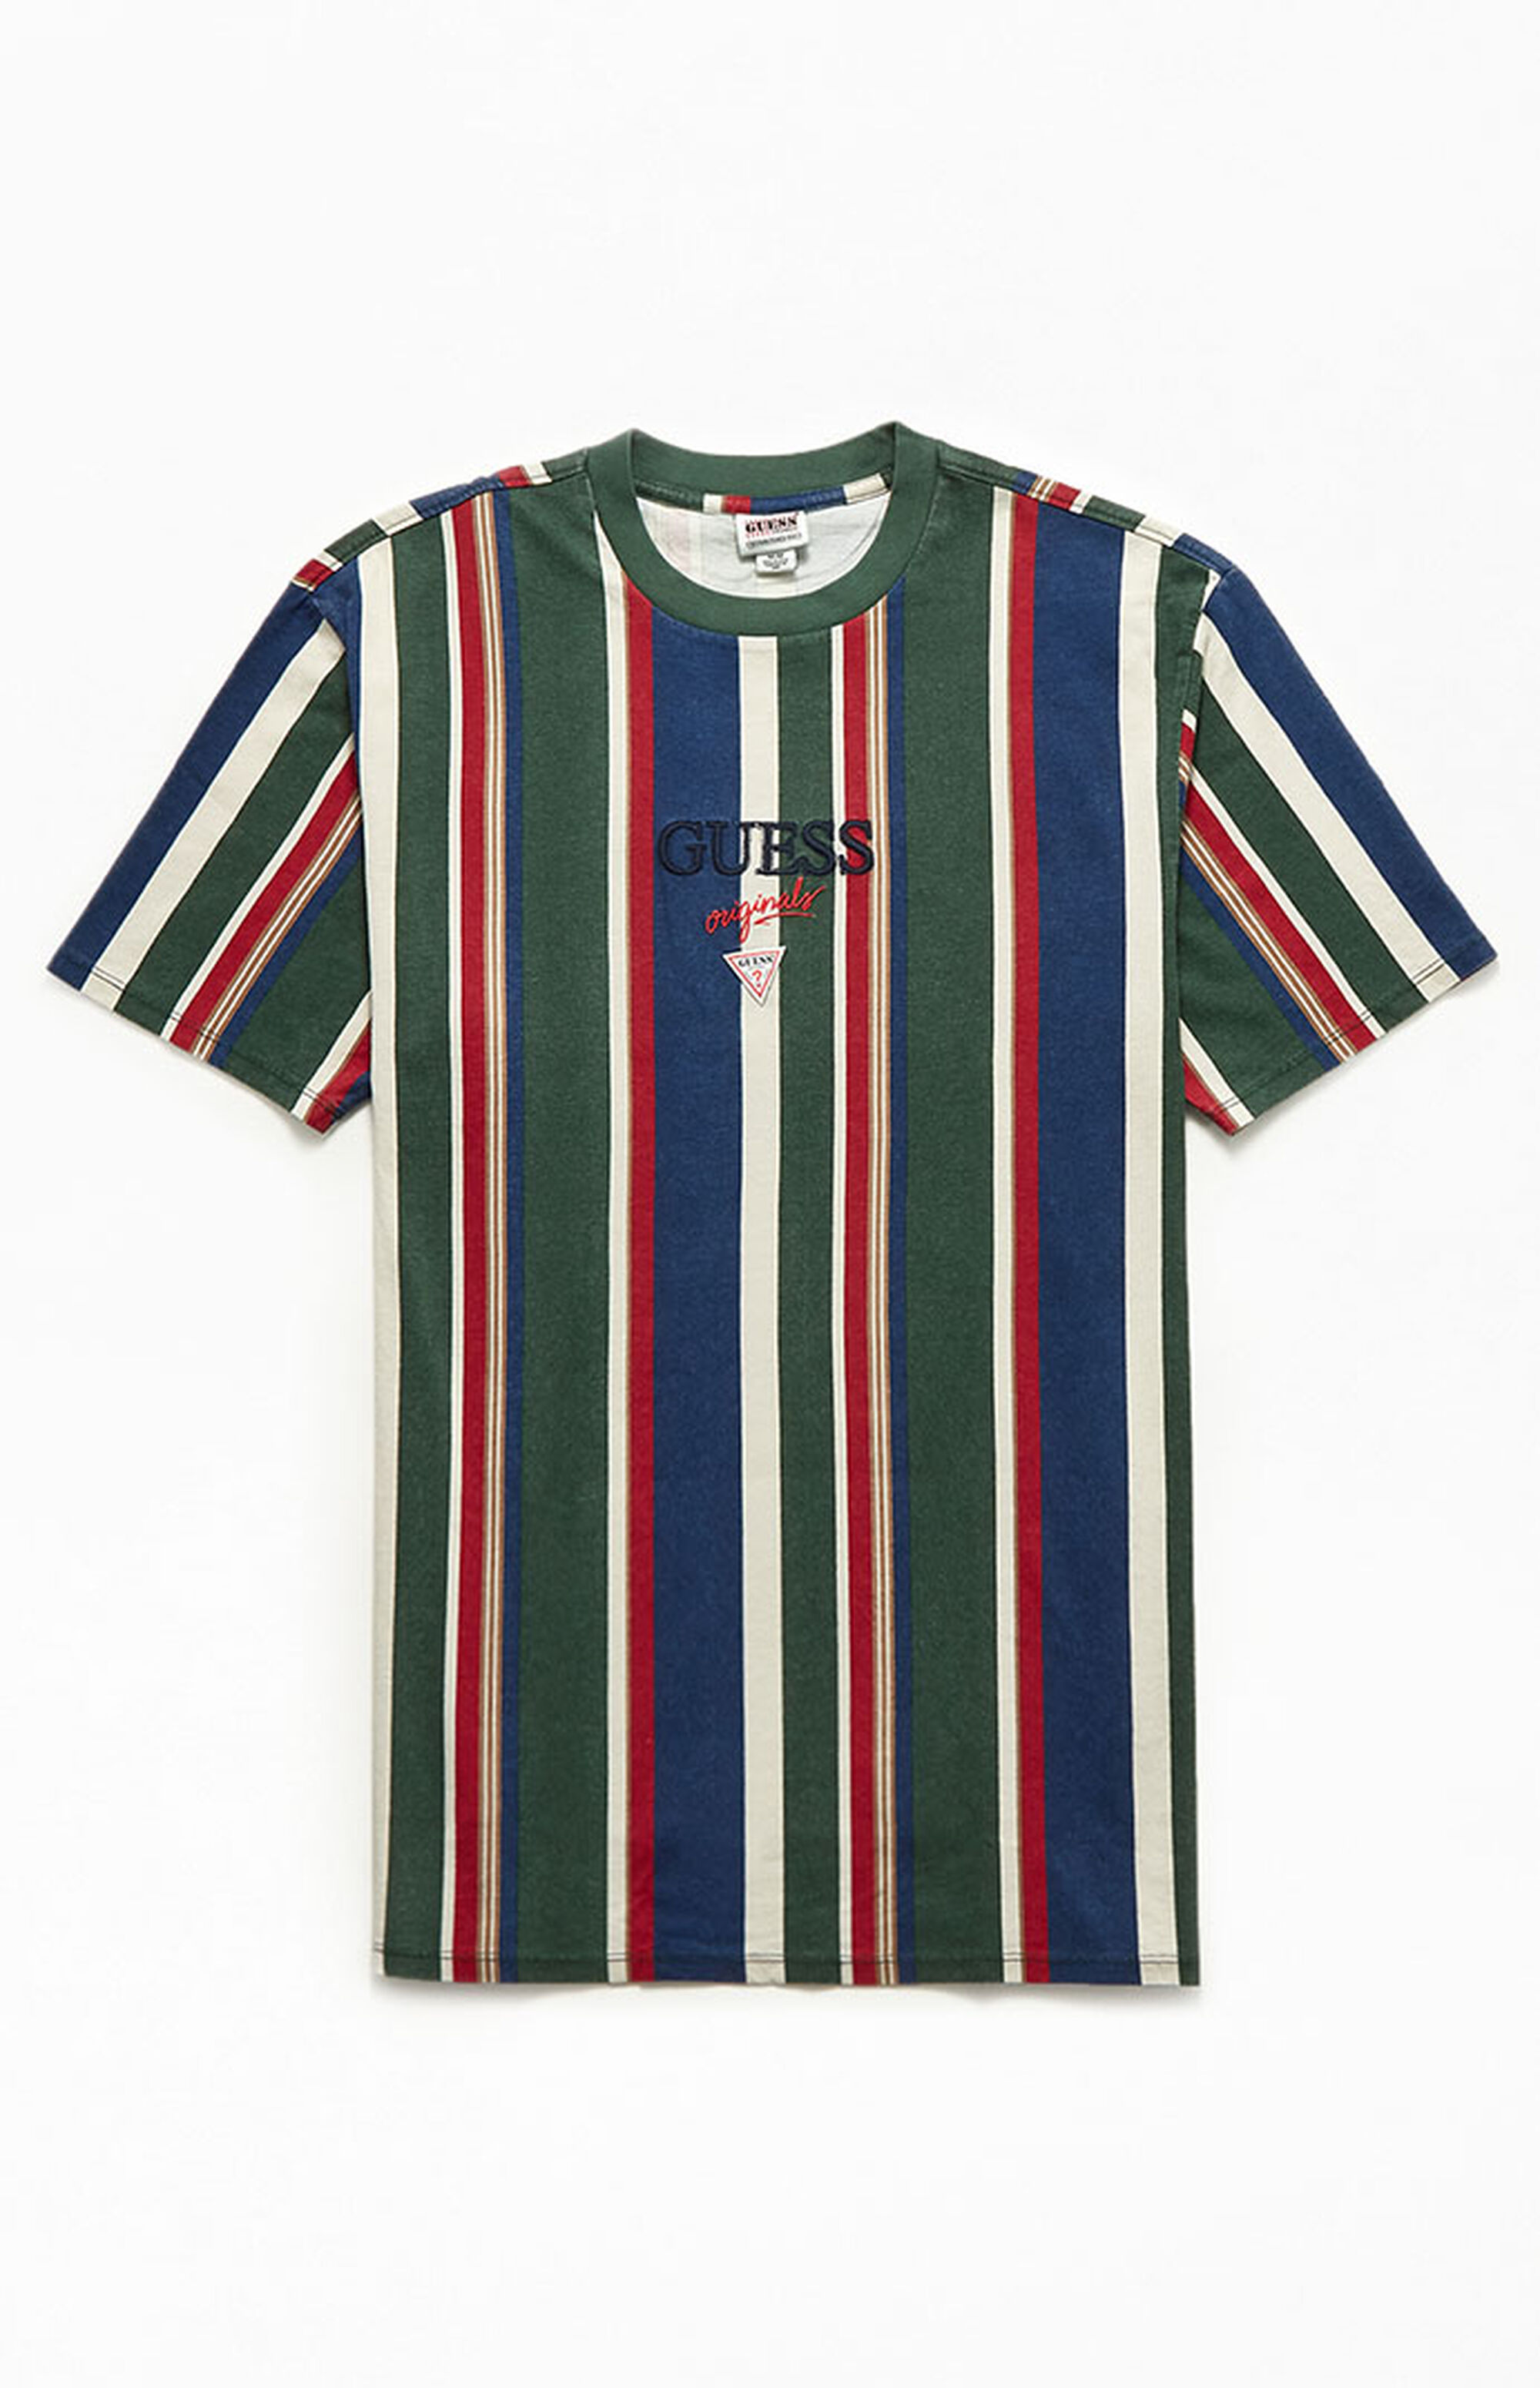 GUESS Originals Bryson Vertical Stripe T-Shirt | PacSun